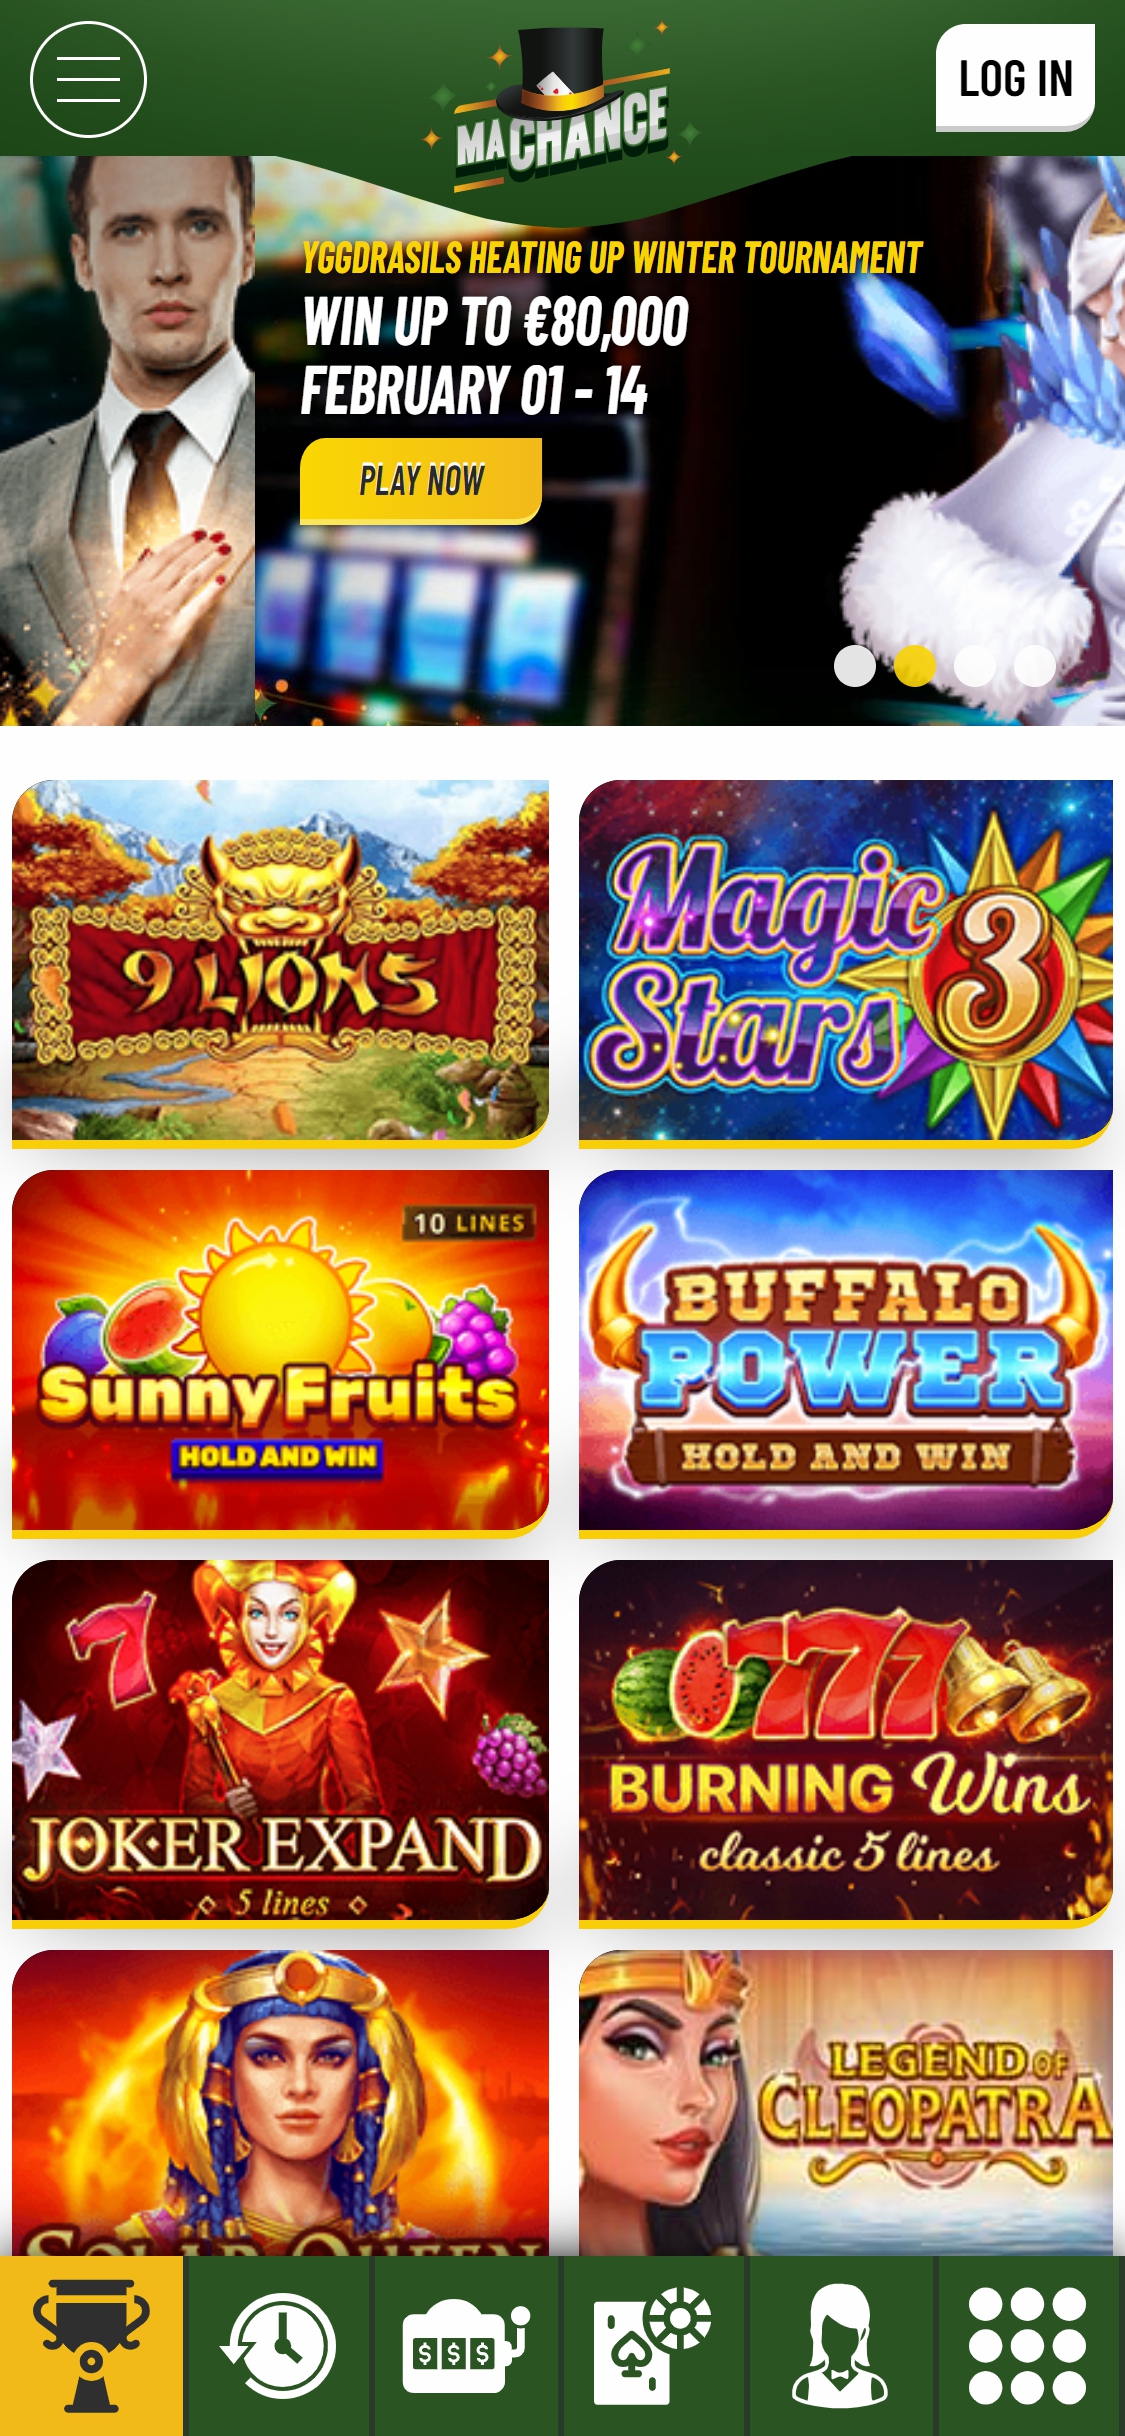 MaChance Casino Mobile Review